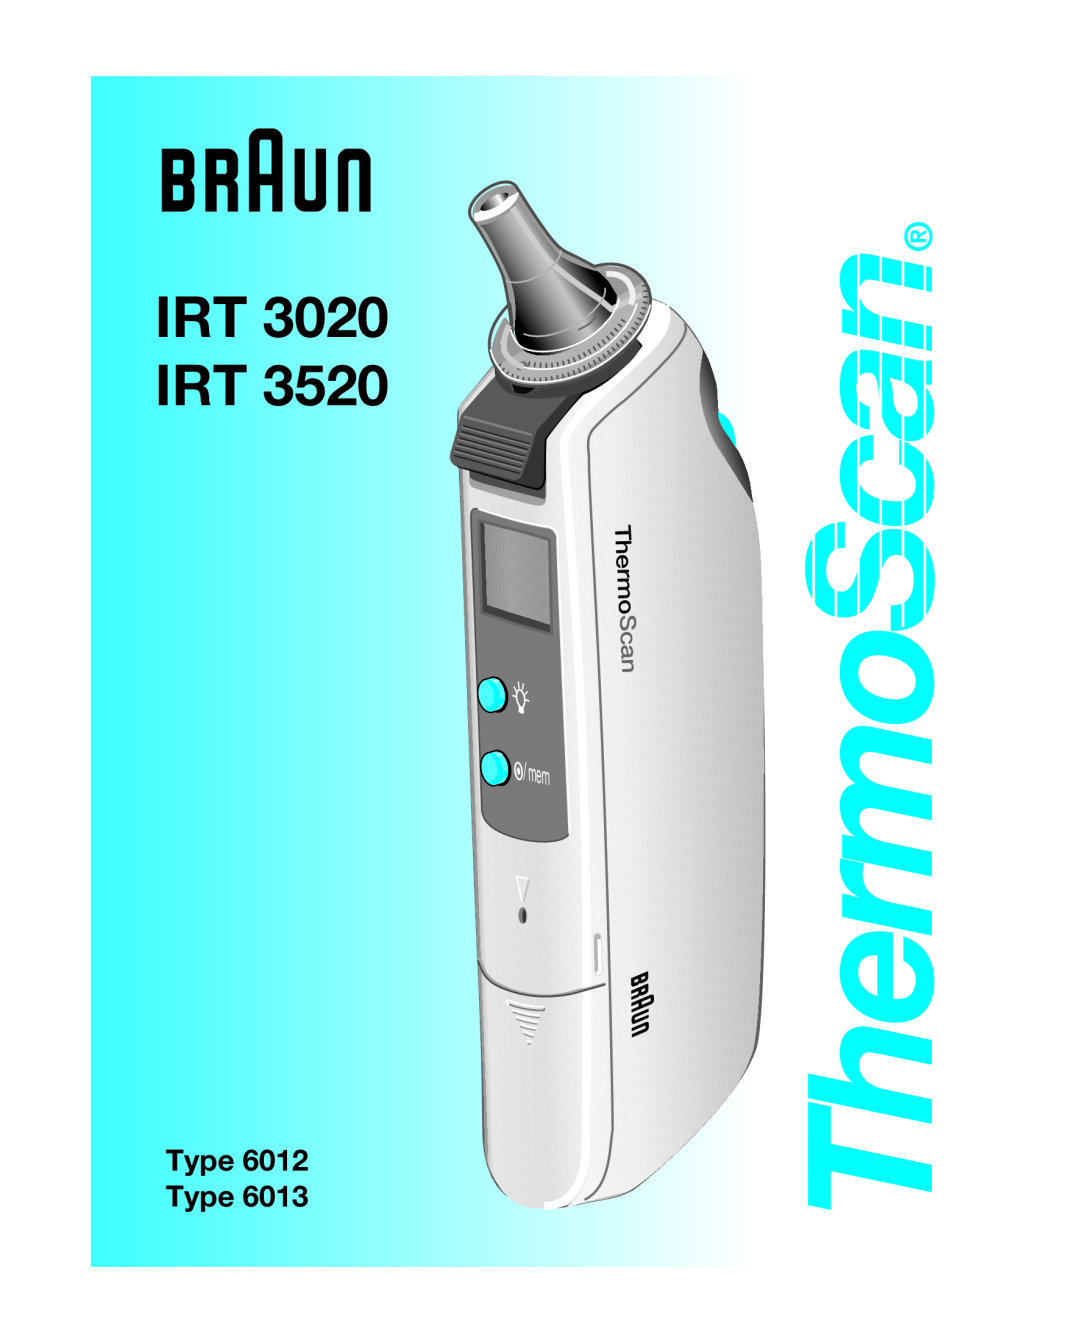 Braun 6013, 6012 manual ThermoScan, Irt Irt, Type Type 